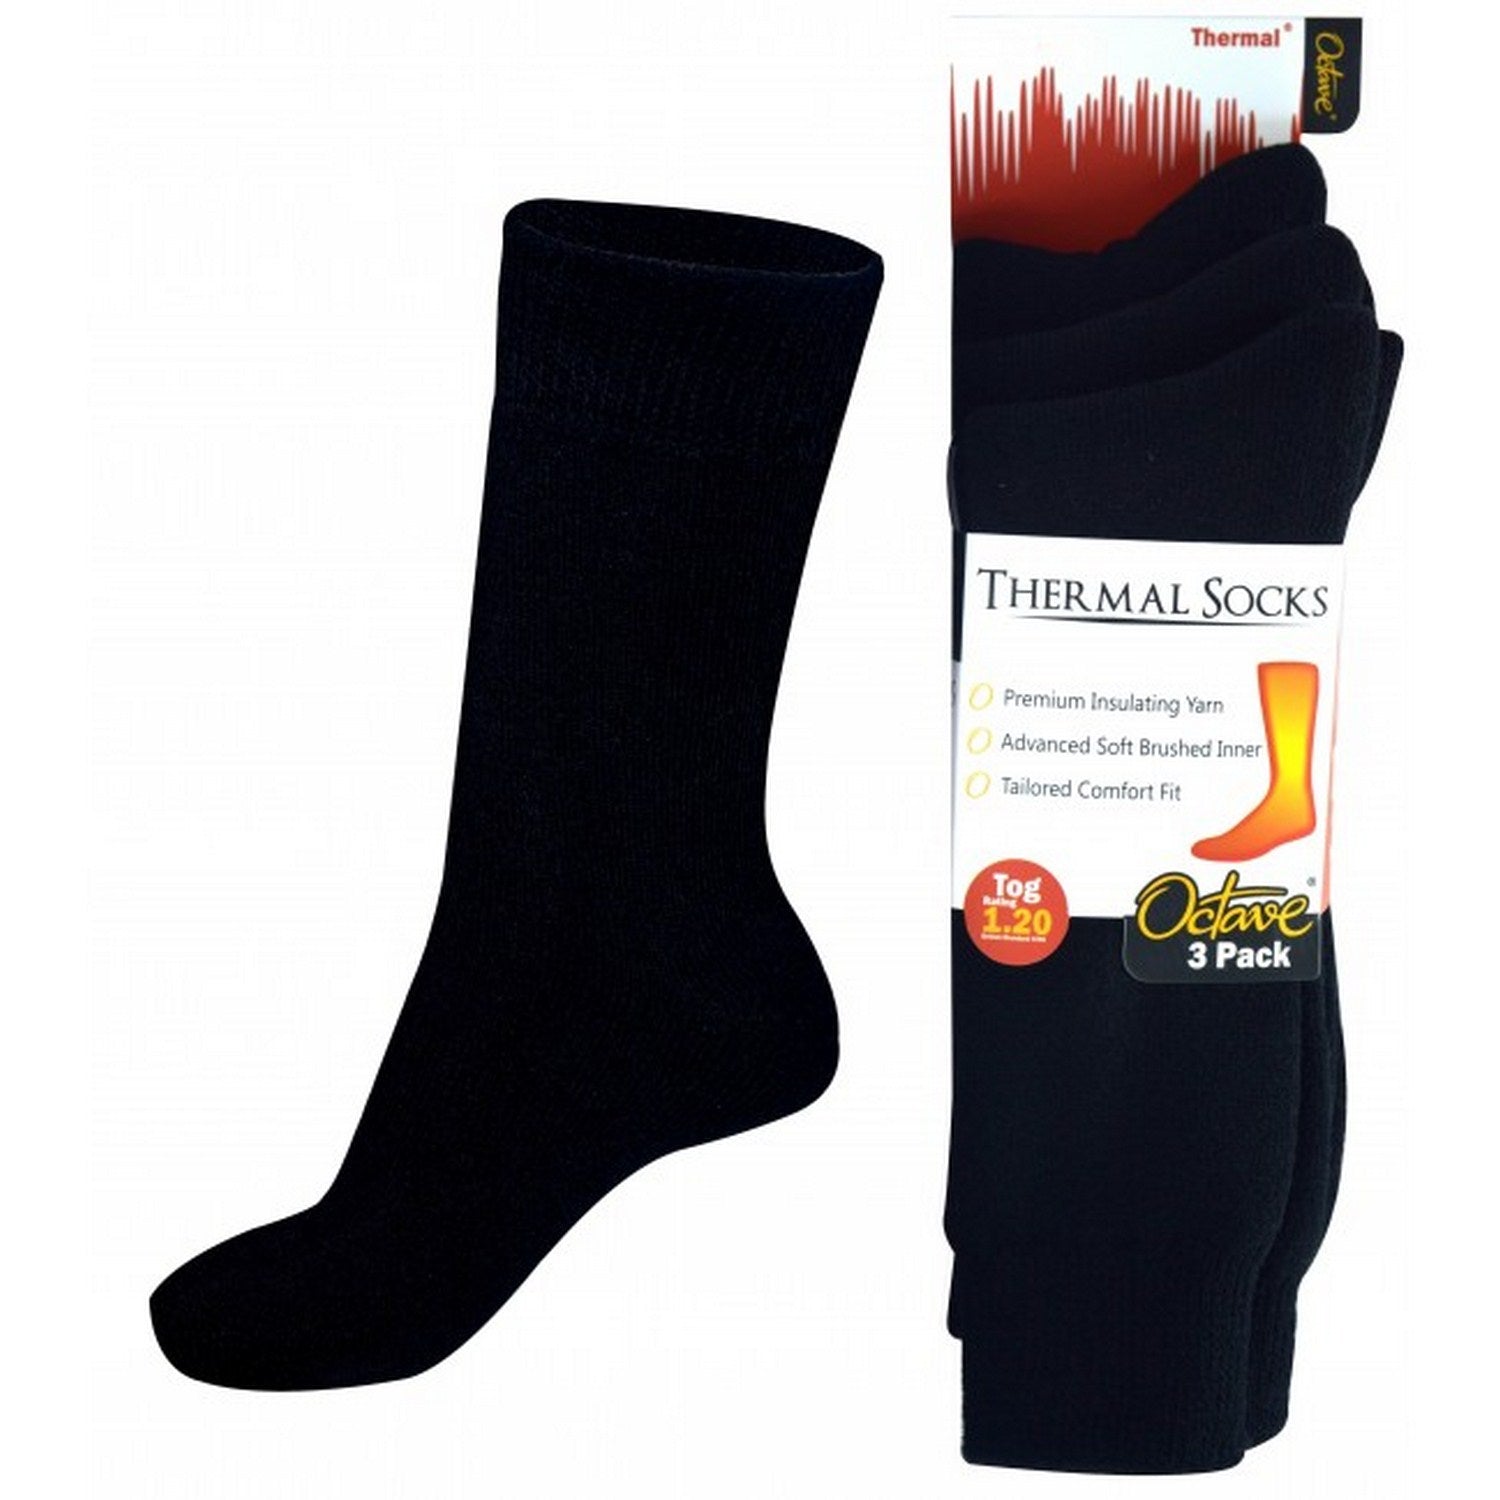 OCTAVE Mens Thermal Socks - 1.2 TOG - Pack of 3